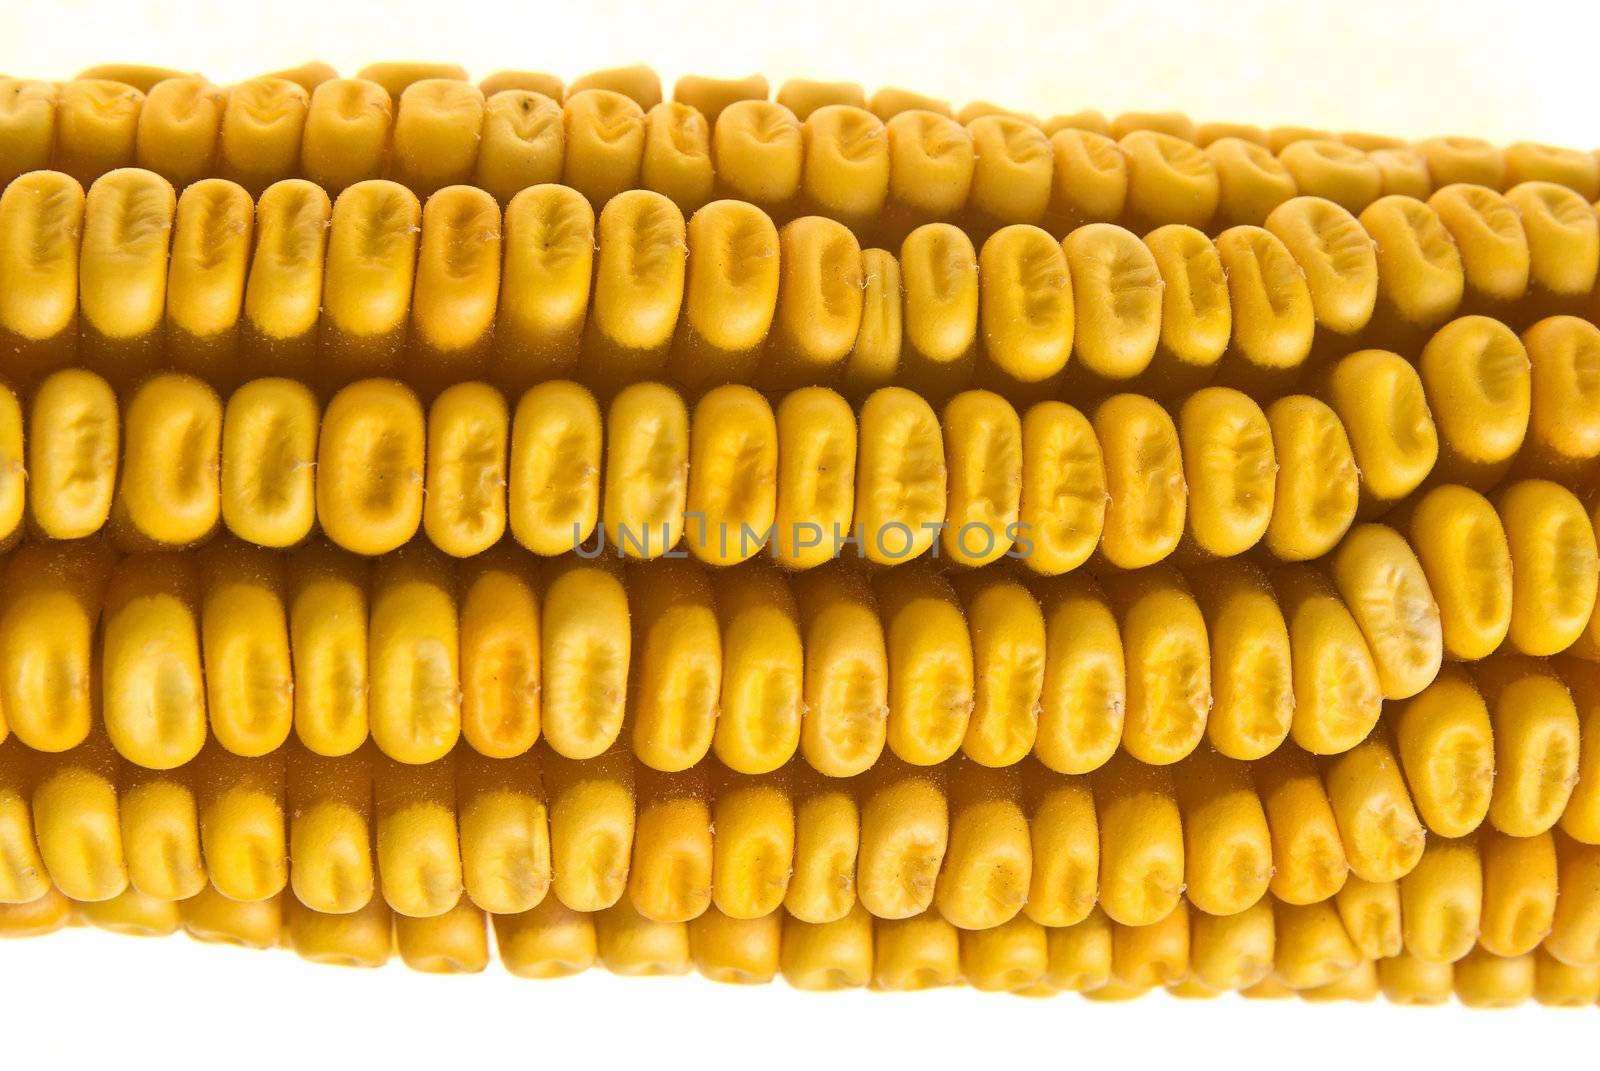 Corn Corncob by adamr